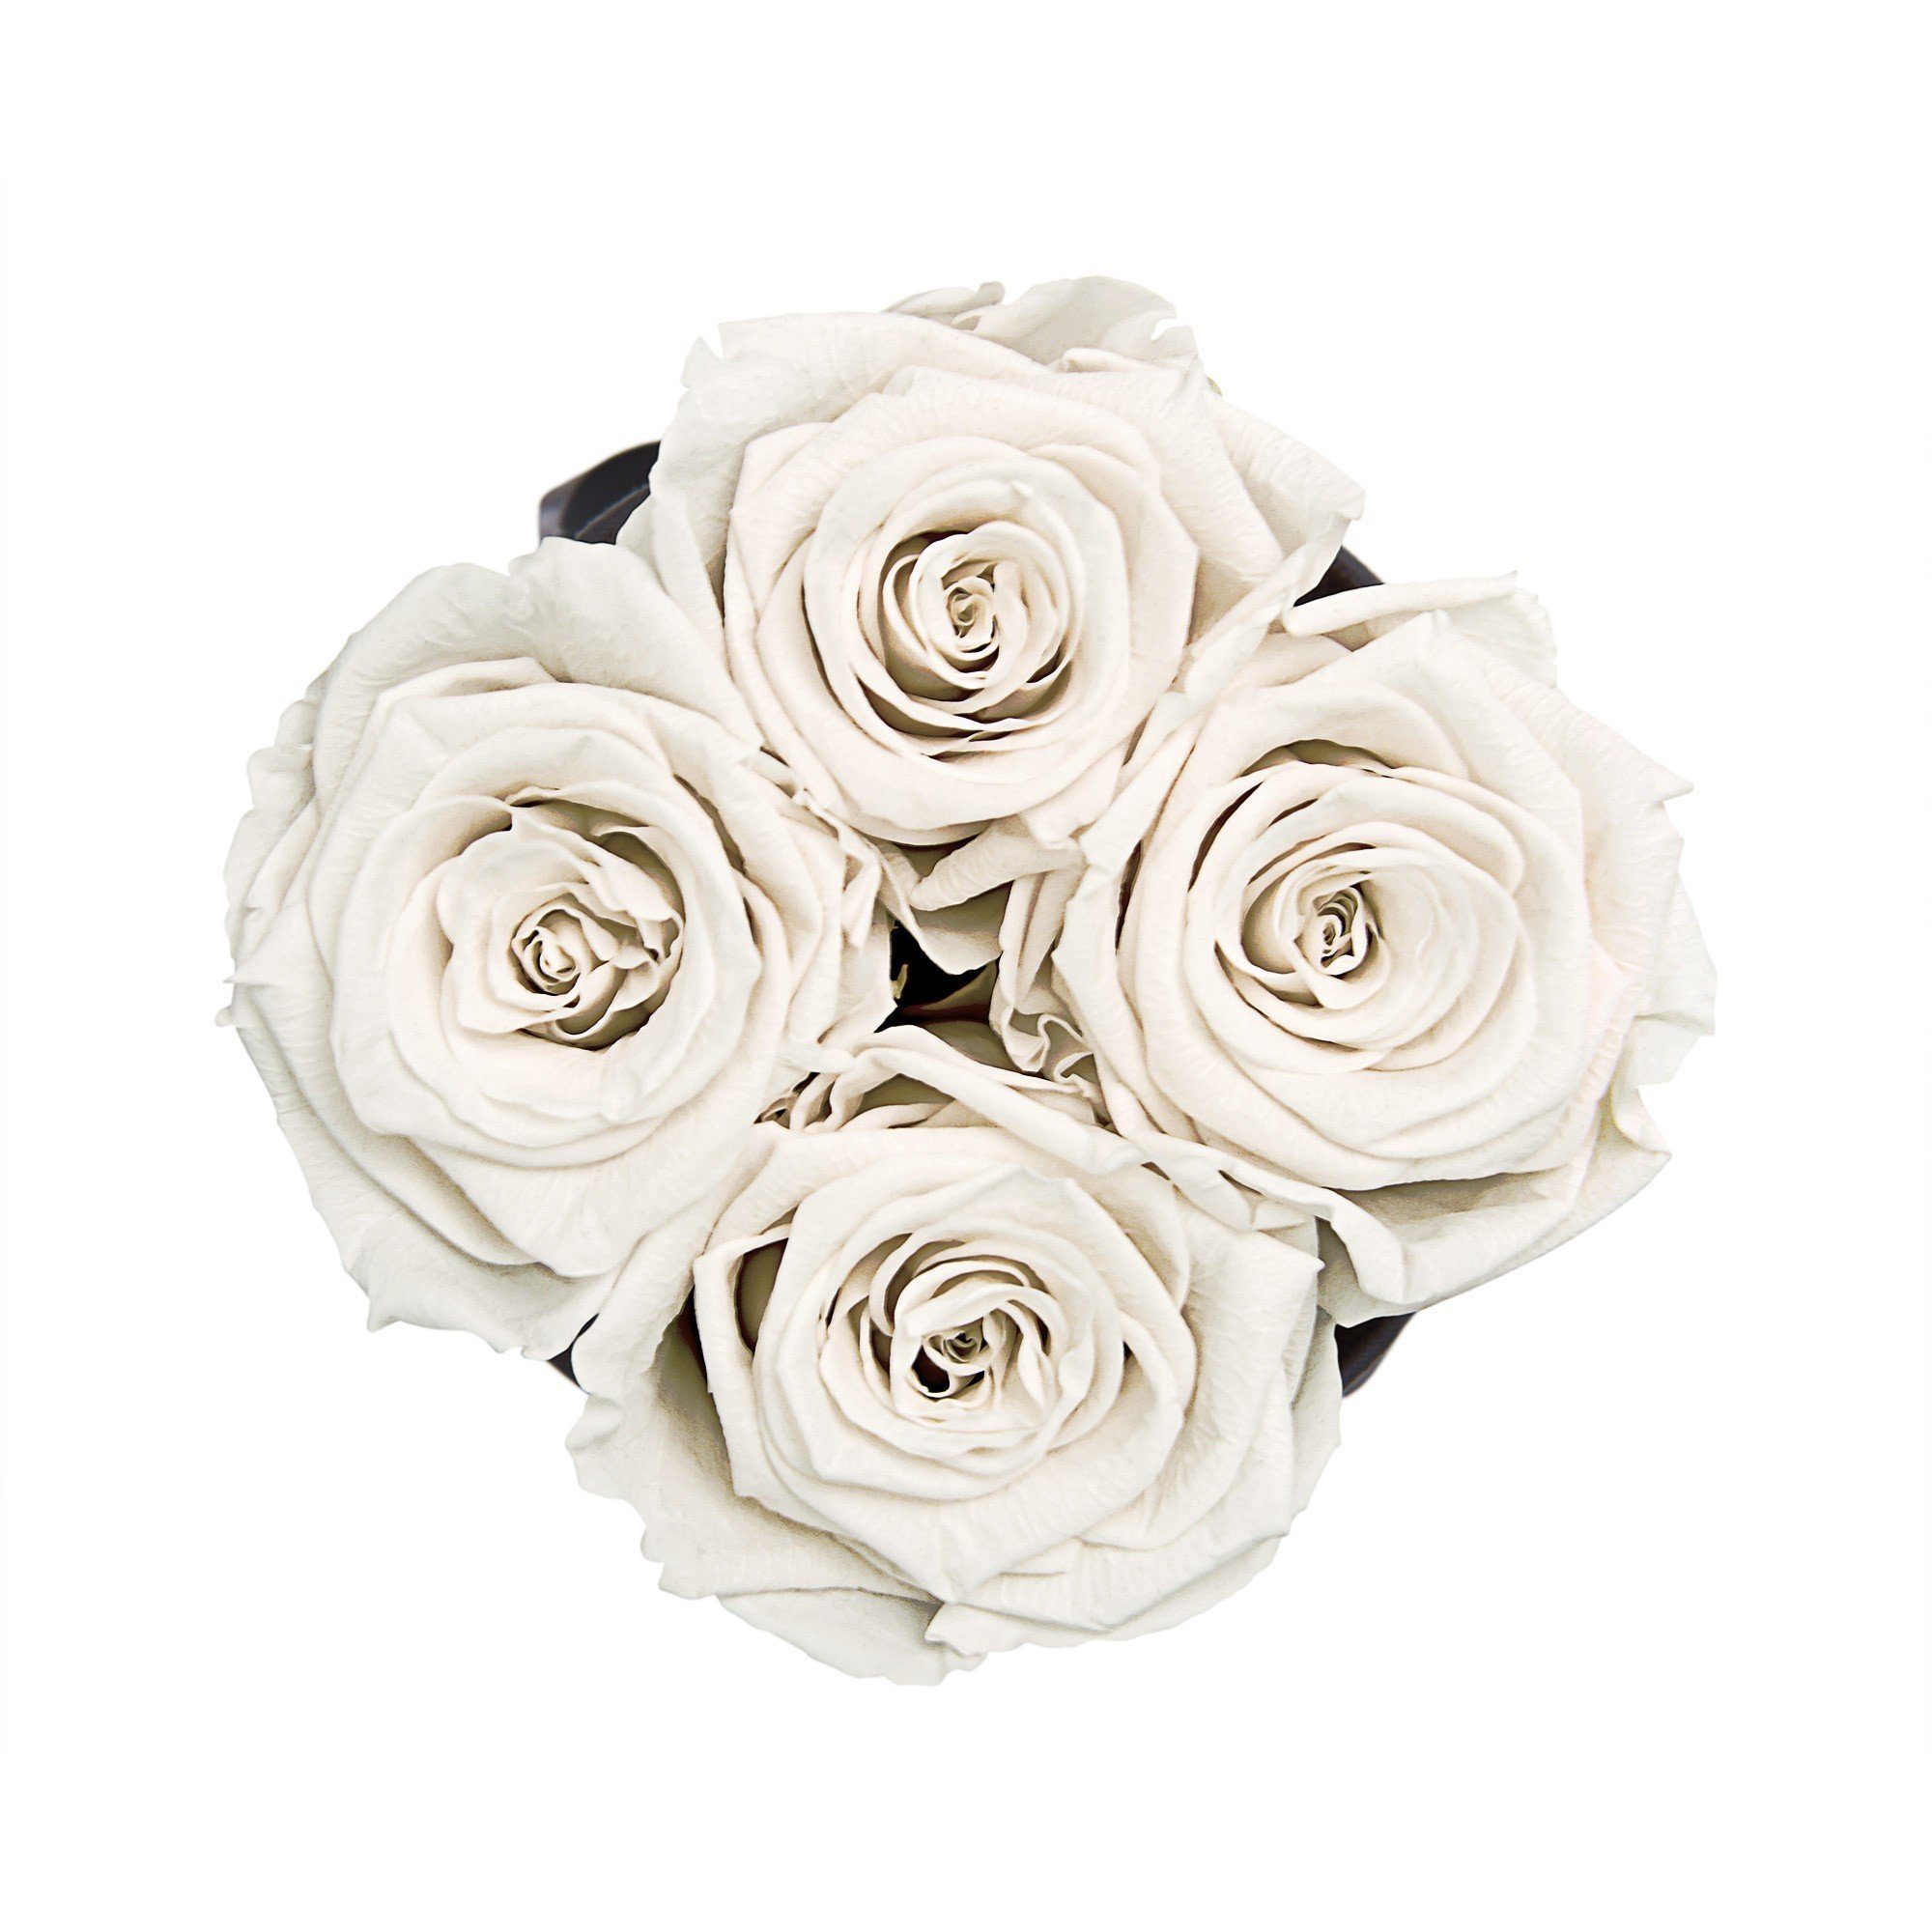 I Höhe Rosen 3 Infinity Echte, Blumen Rosenbox Infinity mit Kunstblume Rose, by Jahre haltbar White Holy Richter schwarz 4-5 I 11 Raul in Flowers, Runde konservierte duftende I cm Holy